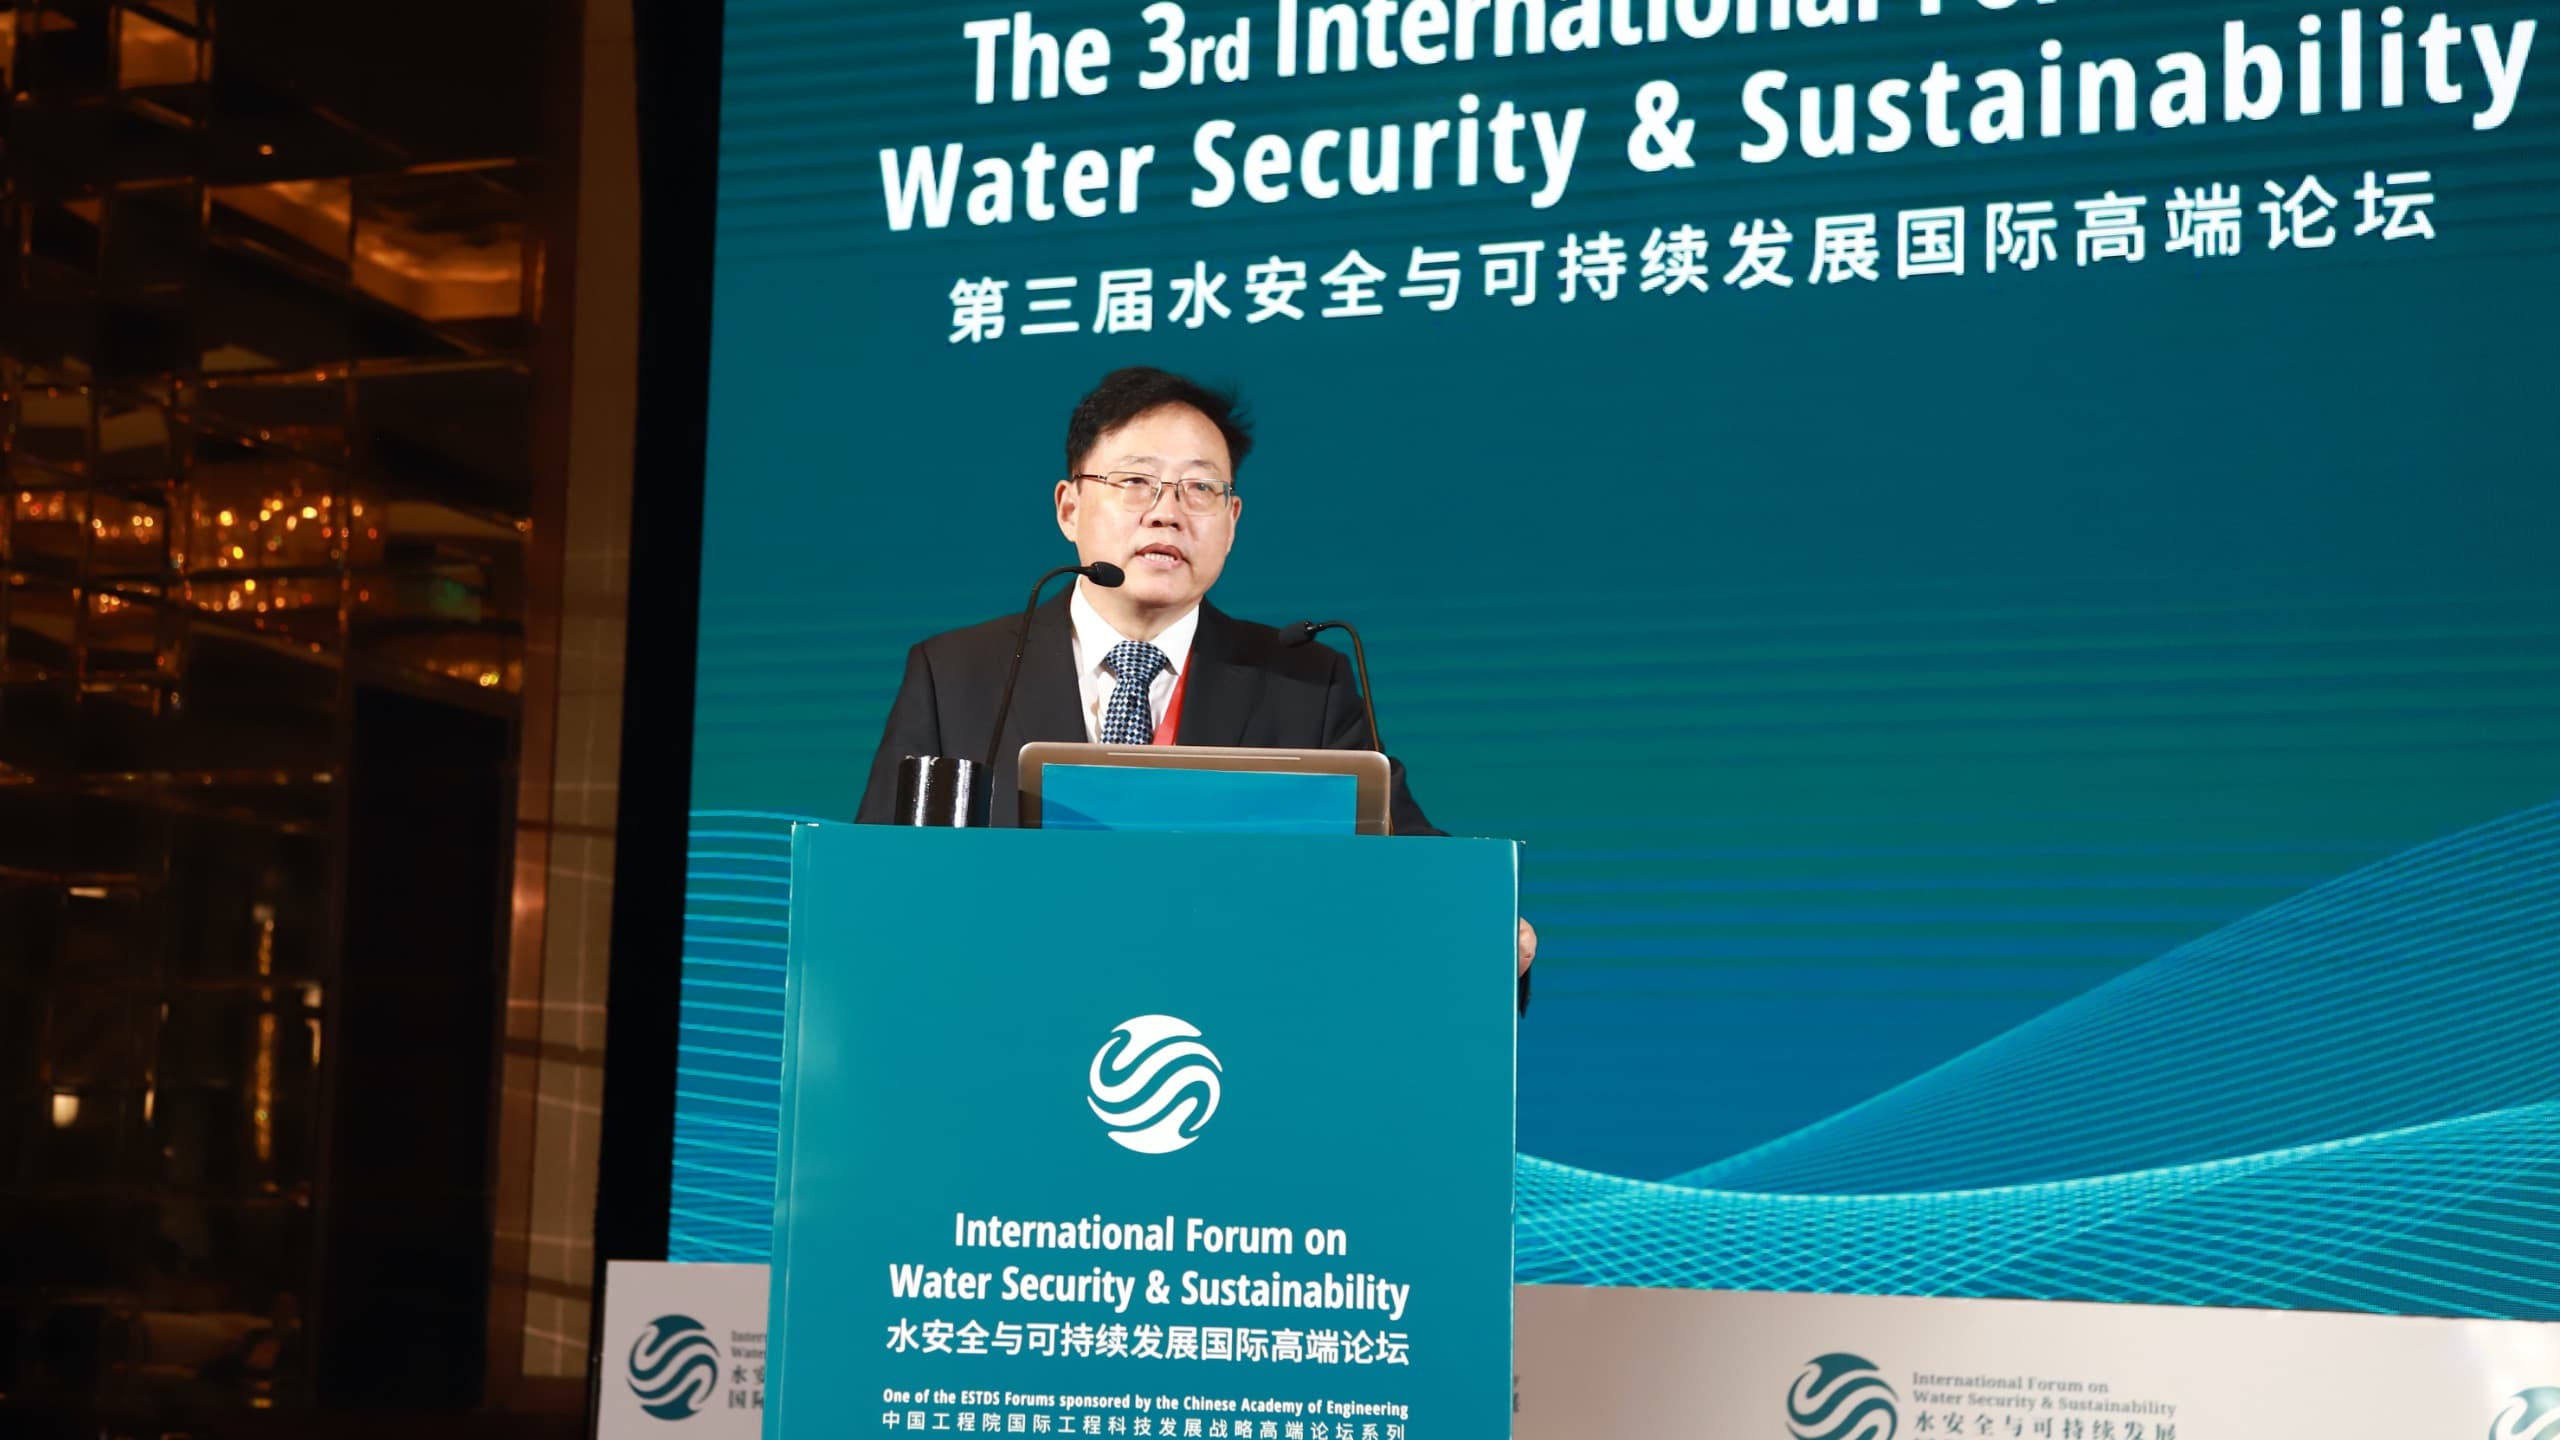 Prof Jianyun Zhang: Water Security is an Imperative Topic